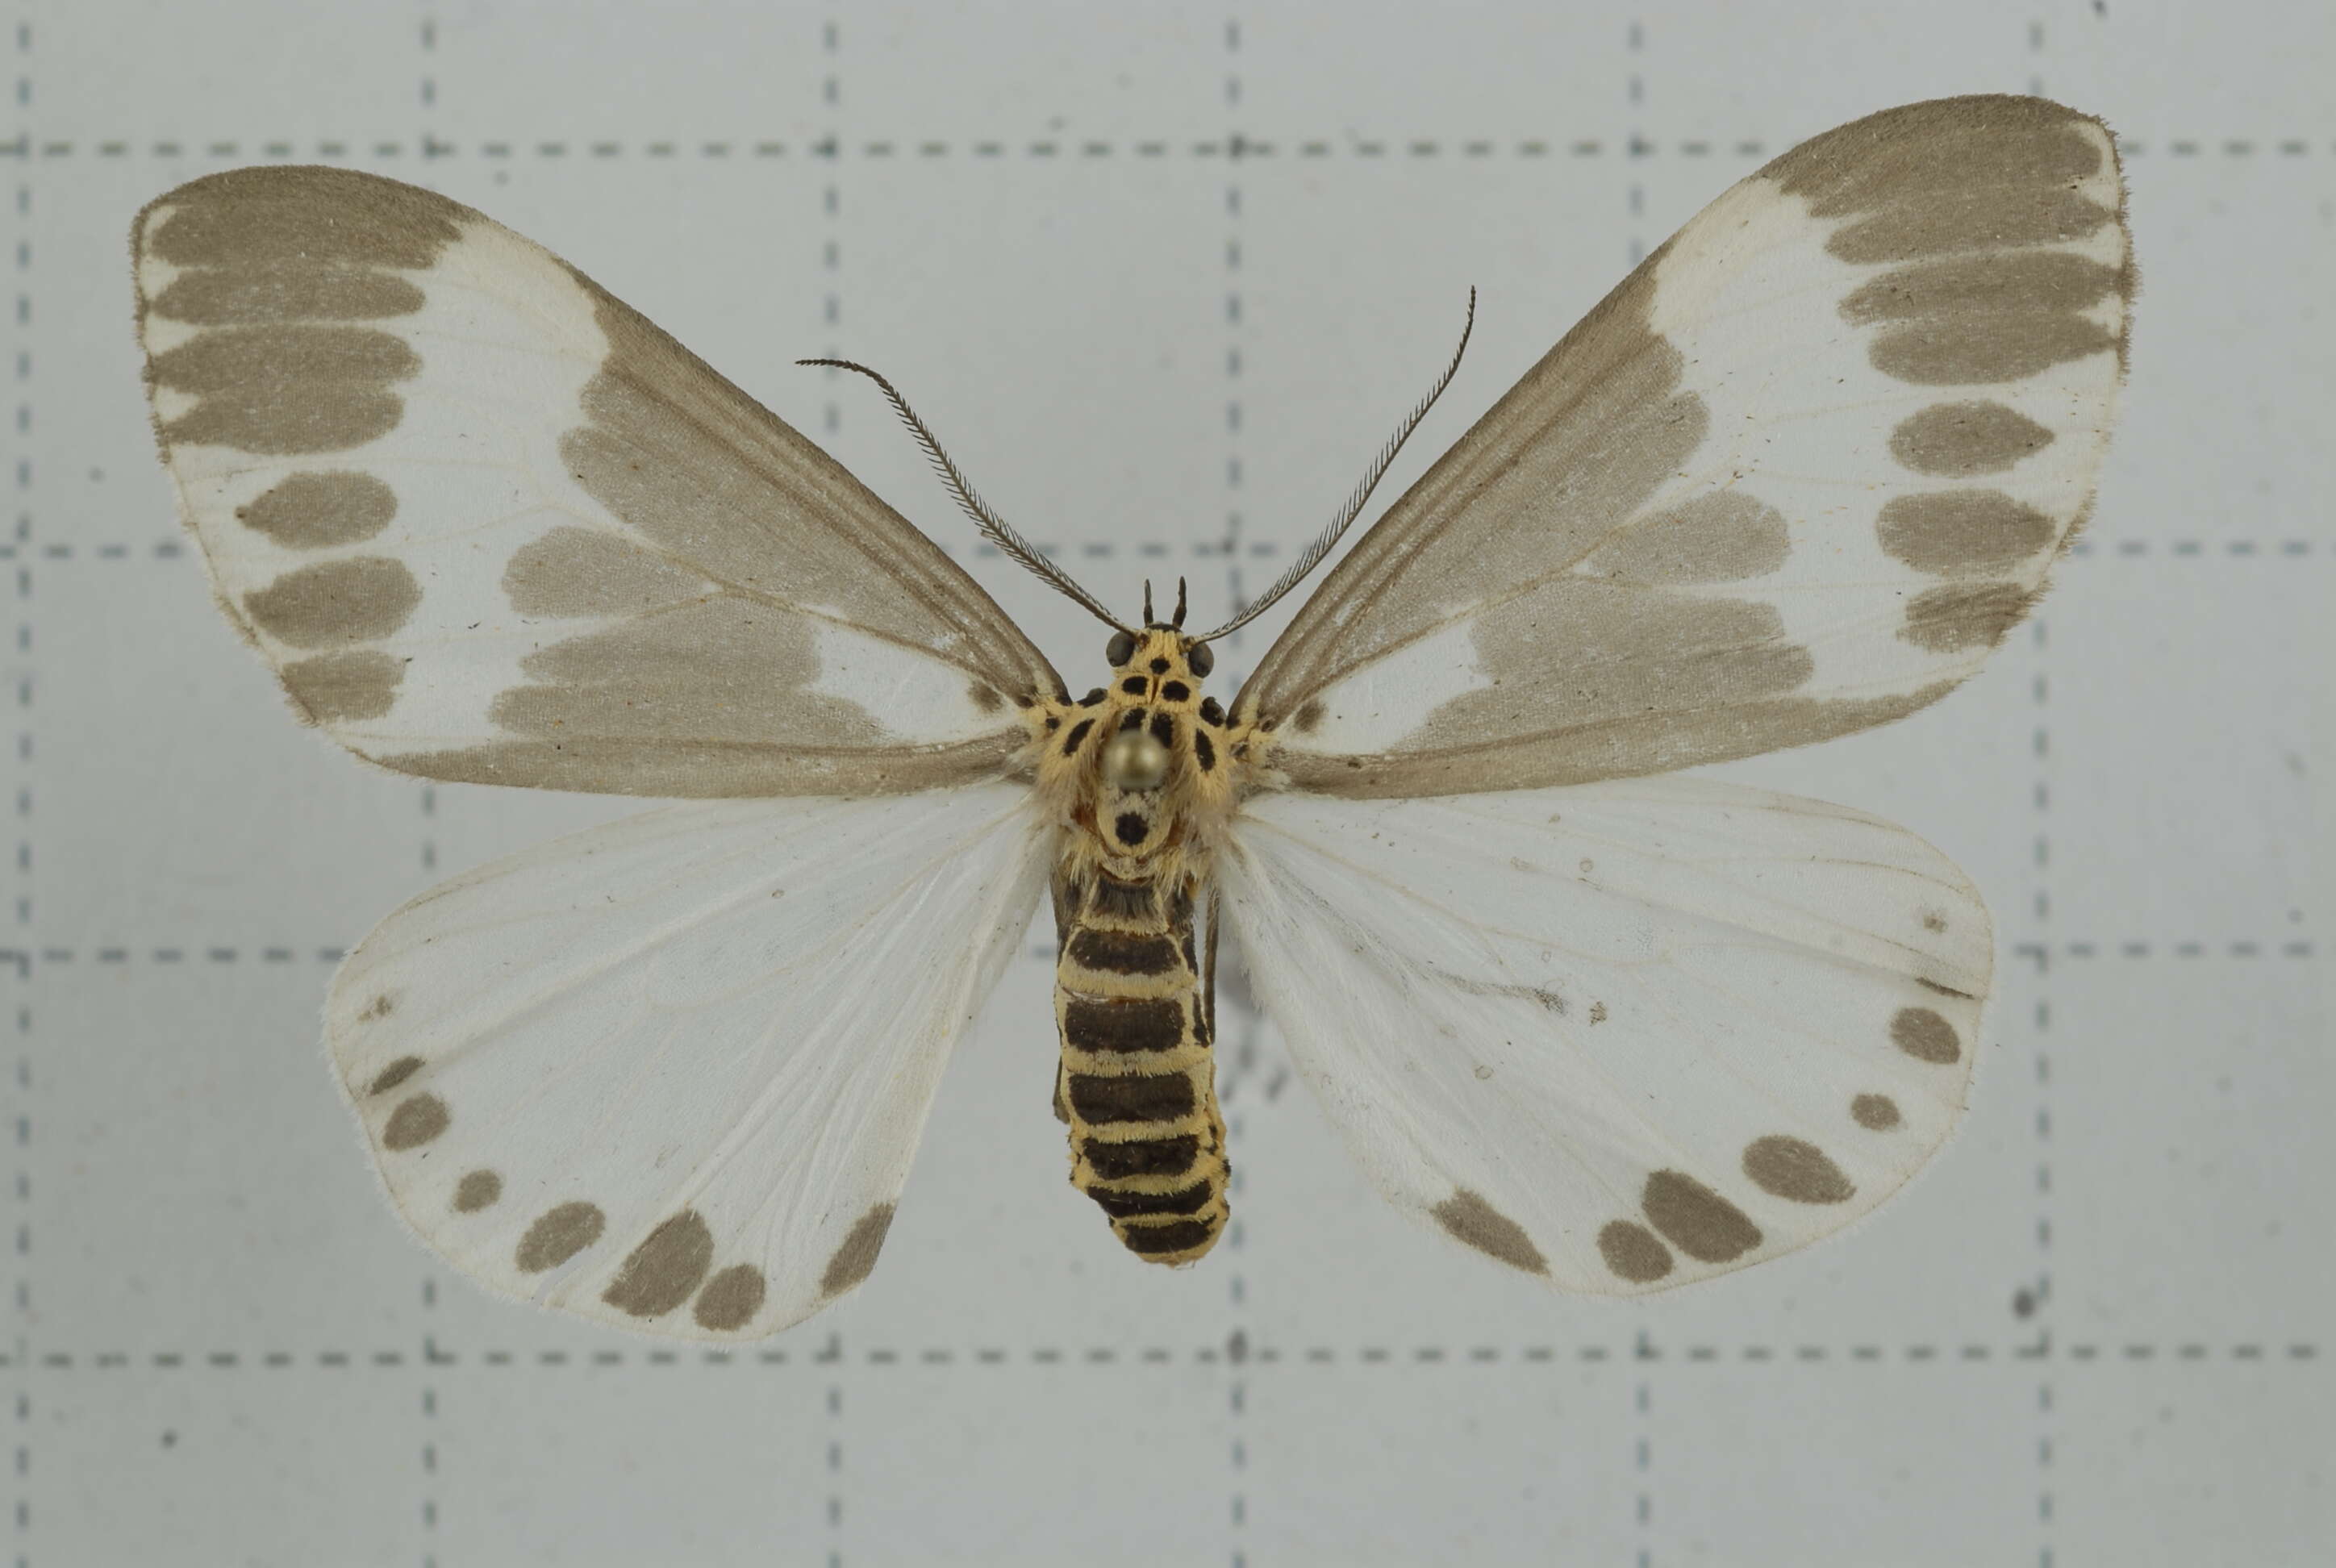 Image of Nyctemera arctata Walker 1856